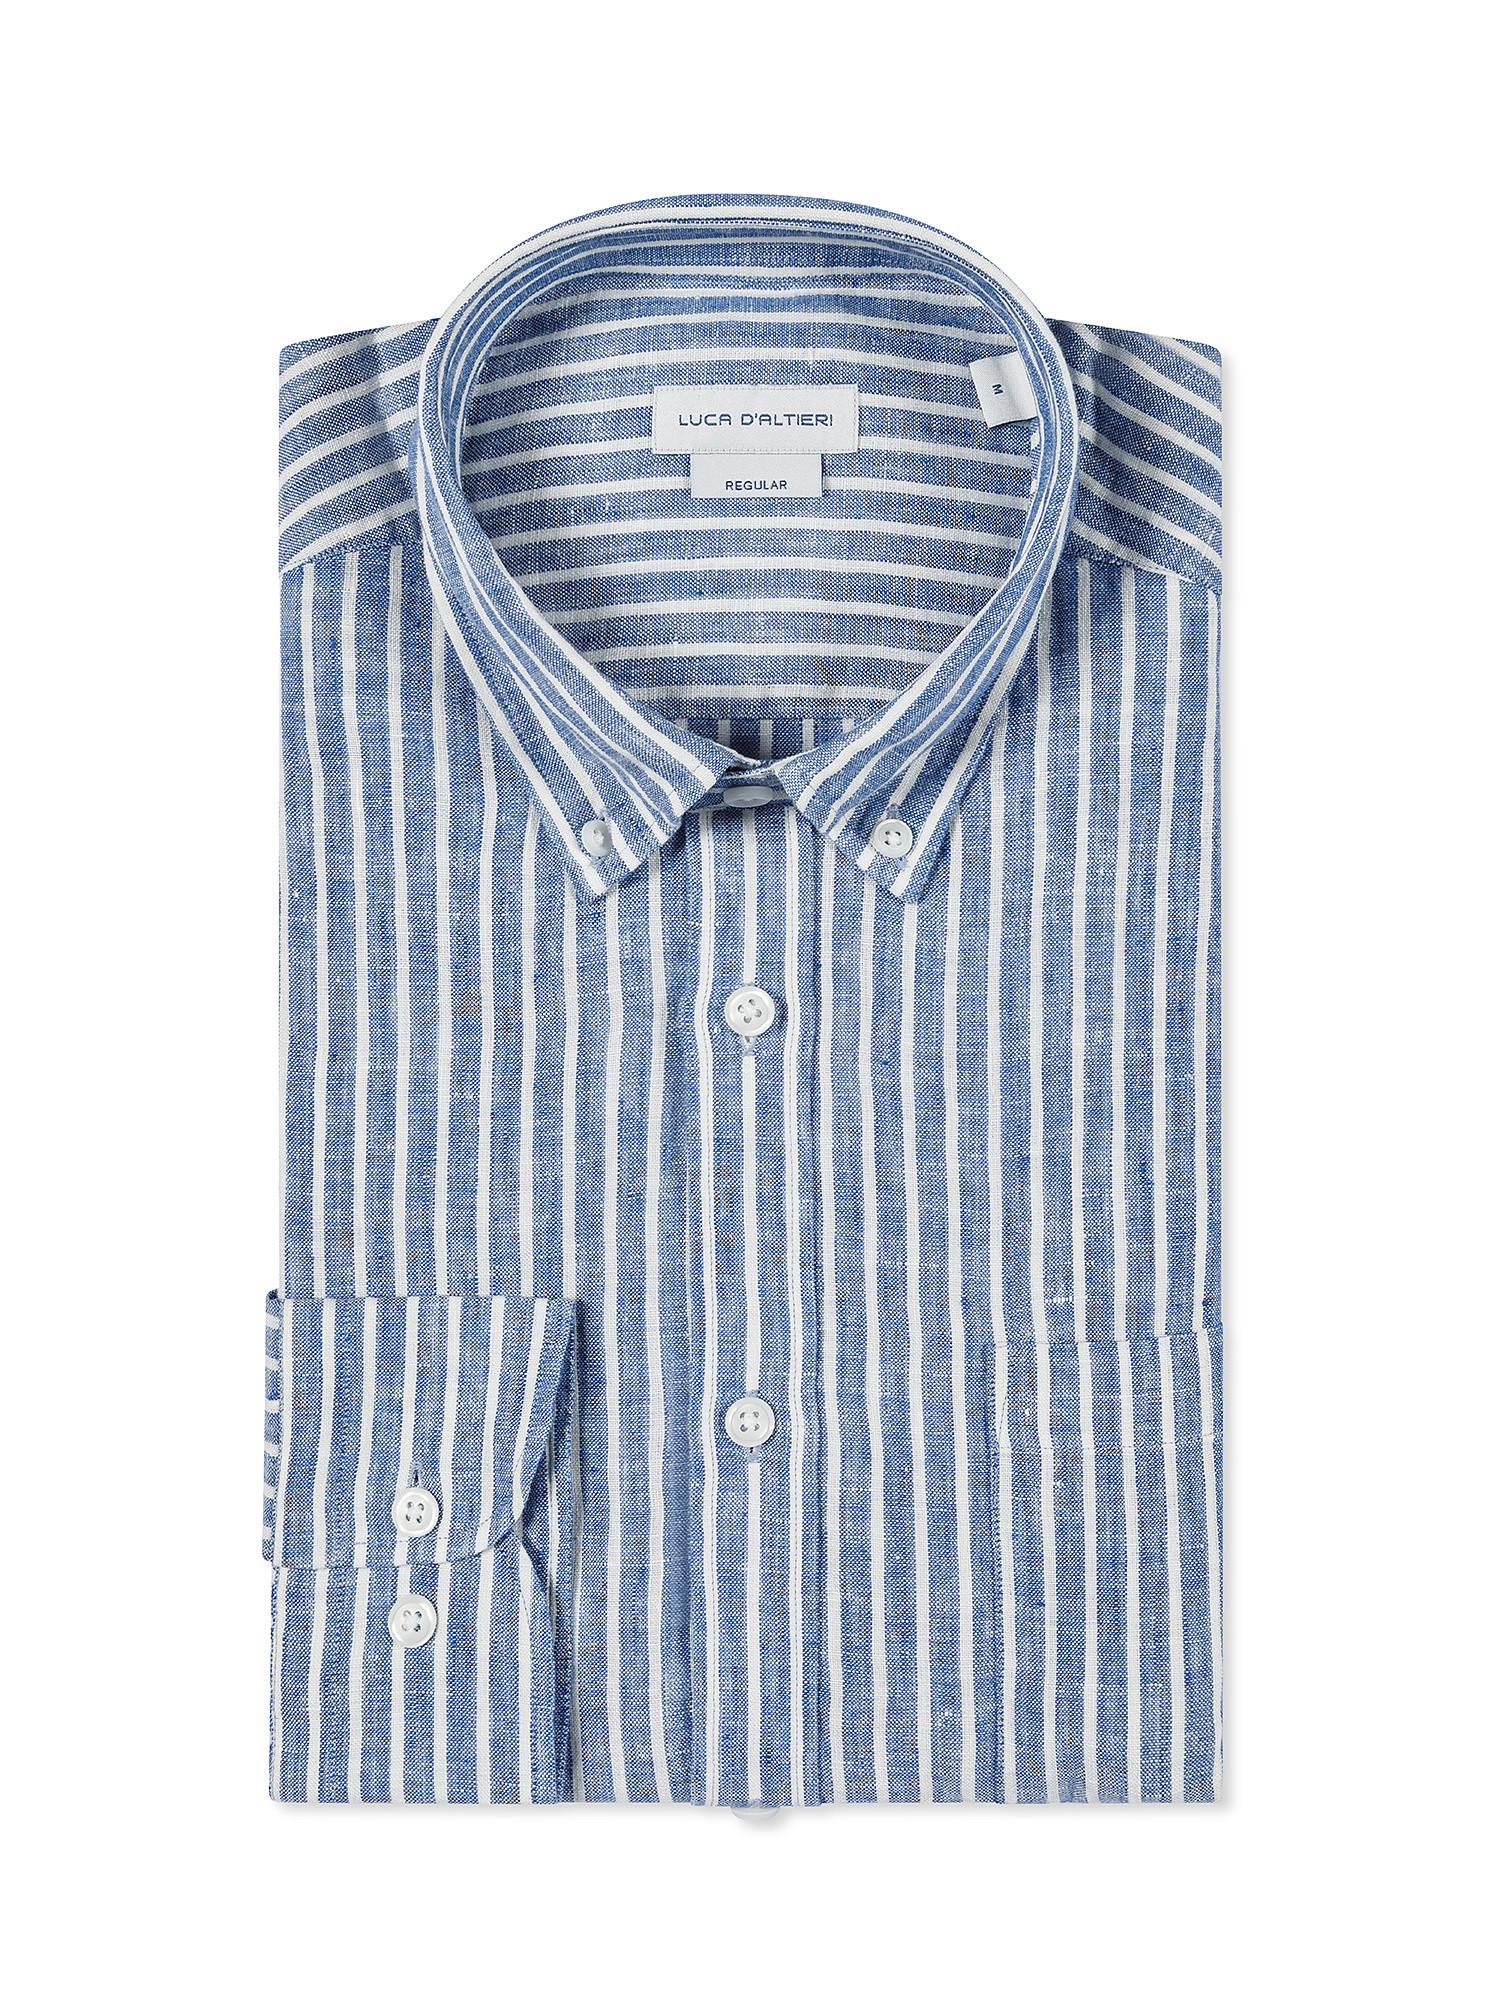 Luca D'Altieri - Regular fit shirt in pure linen, Blue, large image number 2